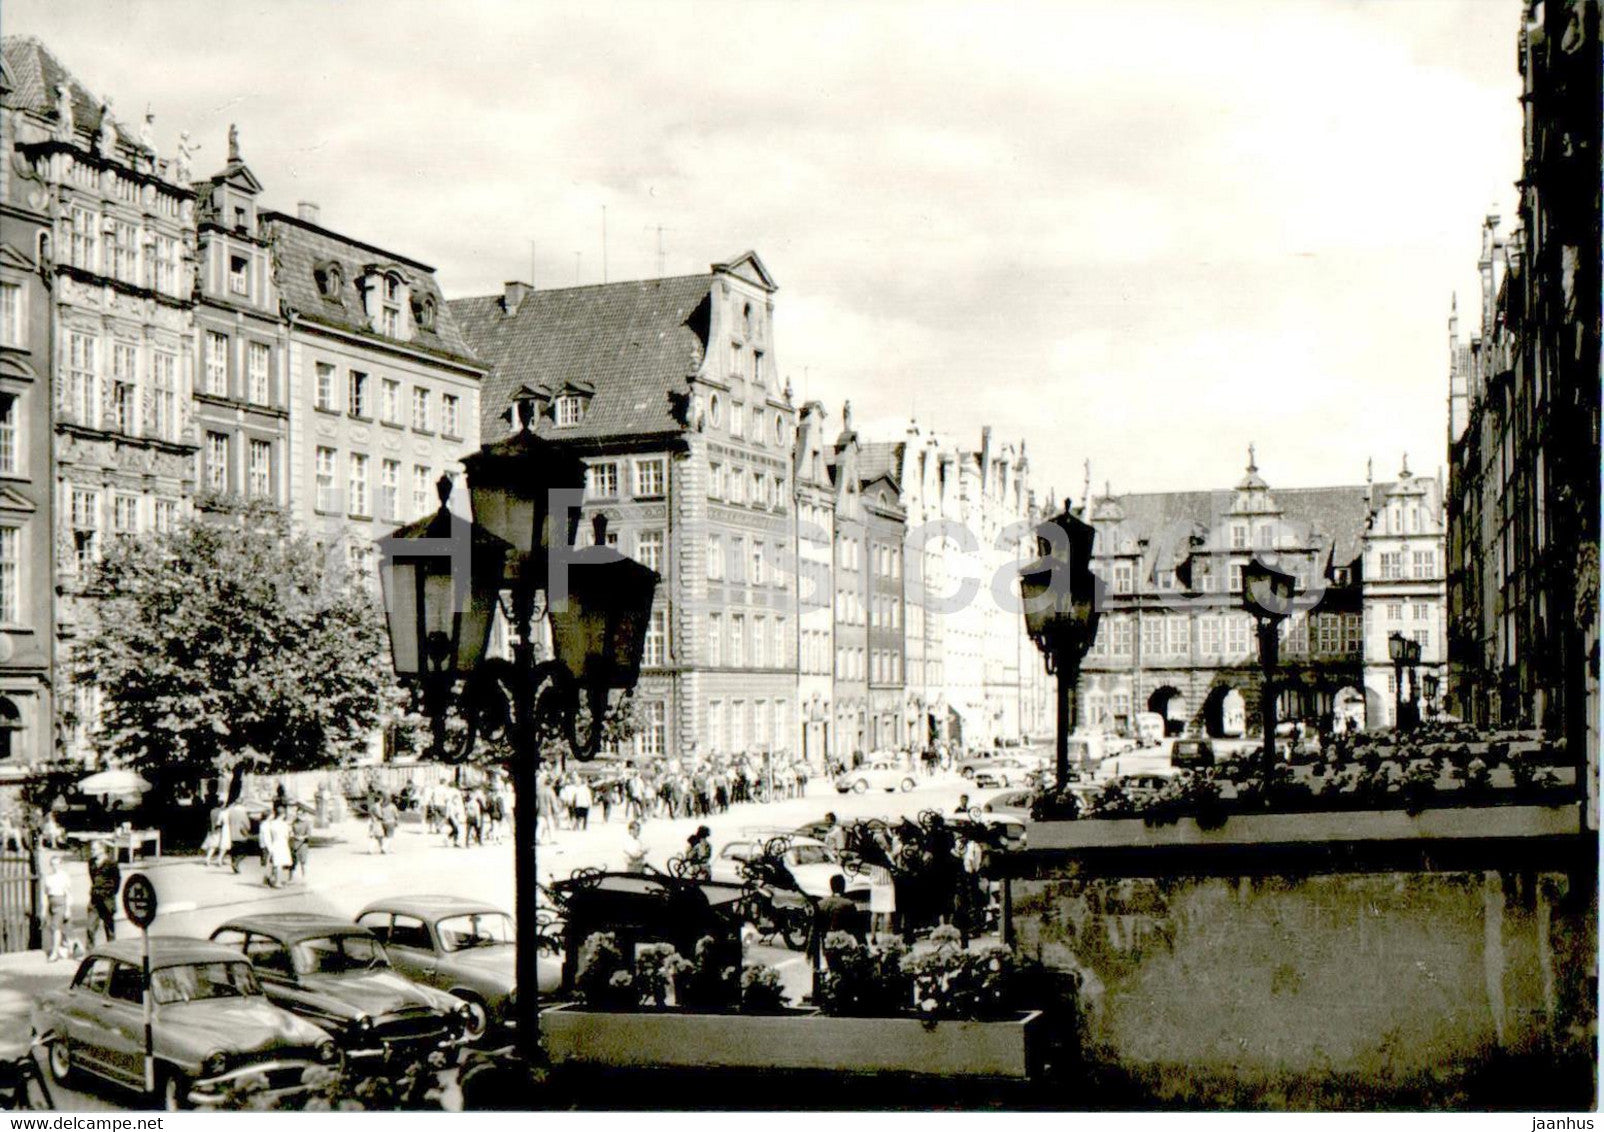 Gdansk - Dlugi Targ - Long Market - car - Poland - unused - JH Postcards